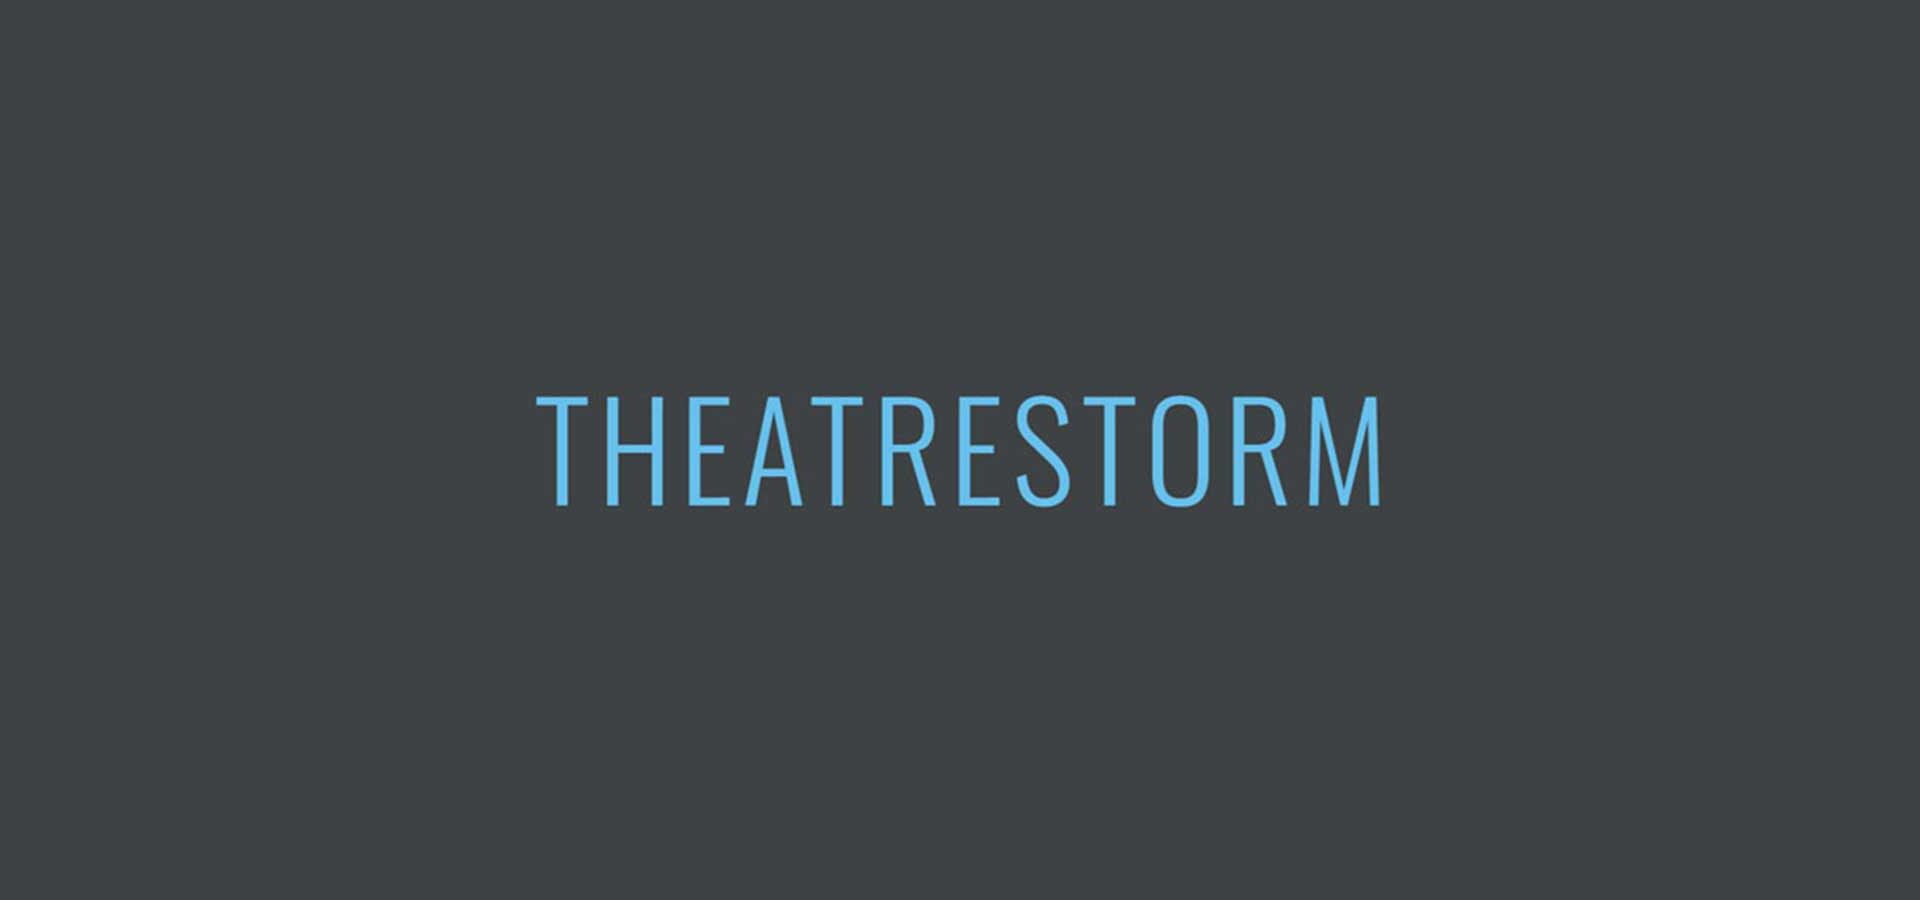 Theatre Storm logo